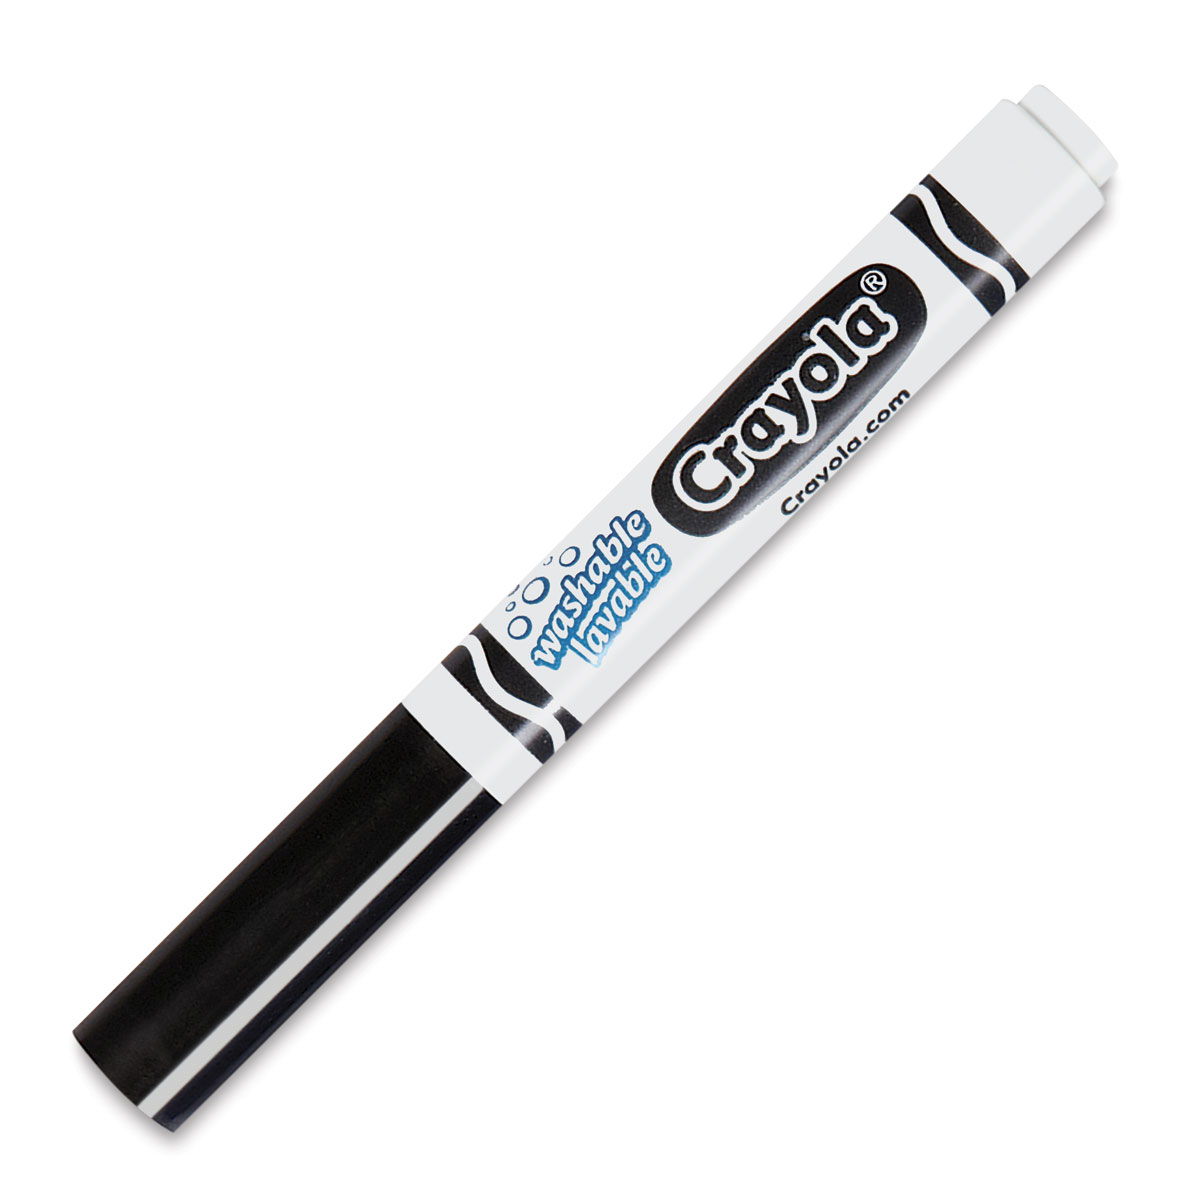 Crayola Ultra-Clean Washable Marker Set - Classic Colors, Broad Tip, Set of  8, BLICK Art Materials